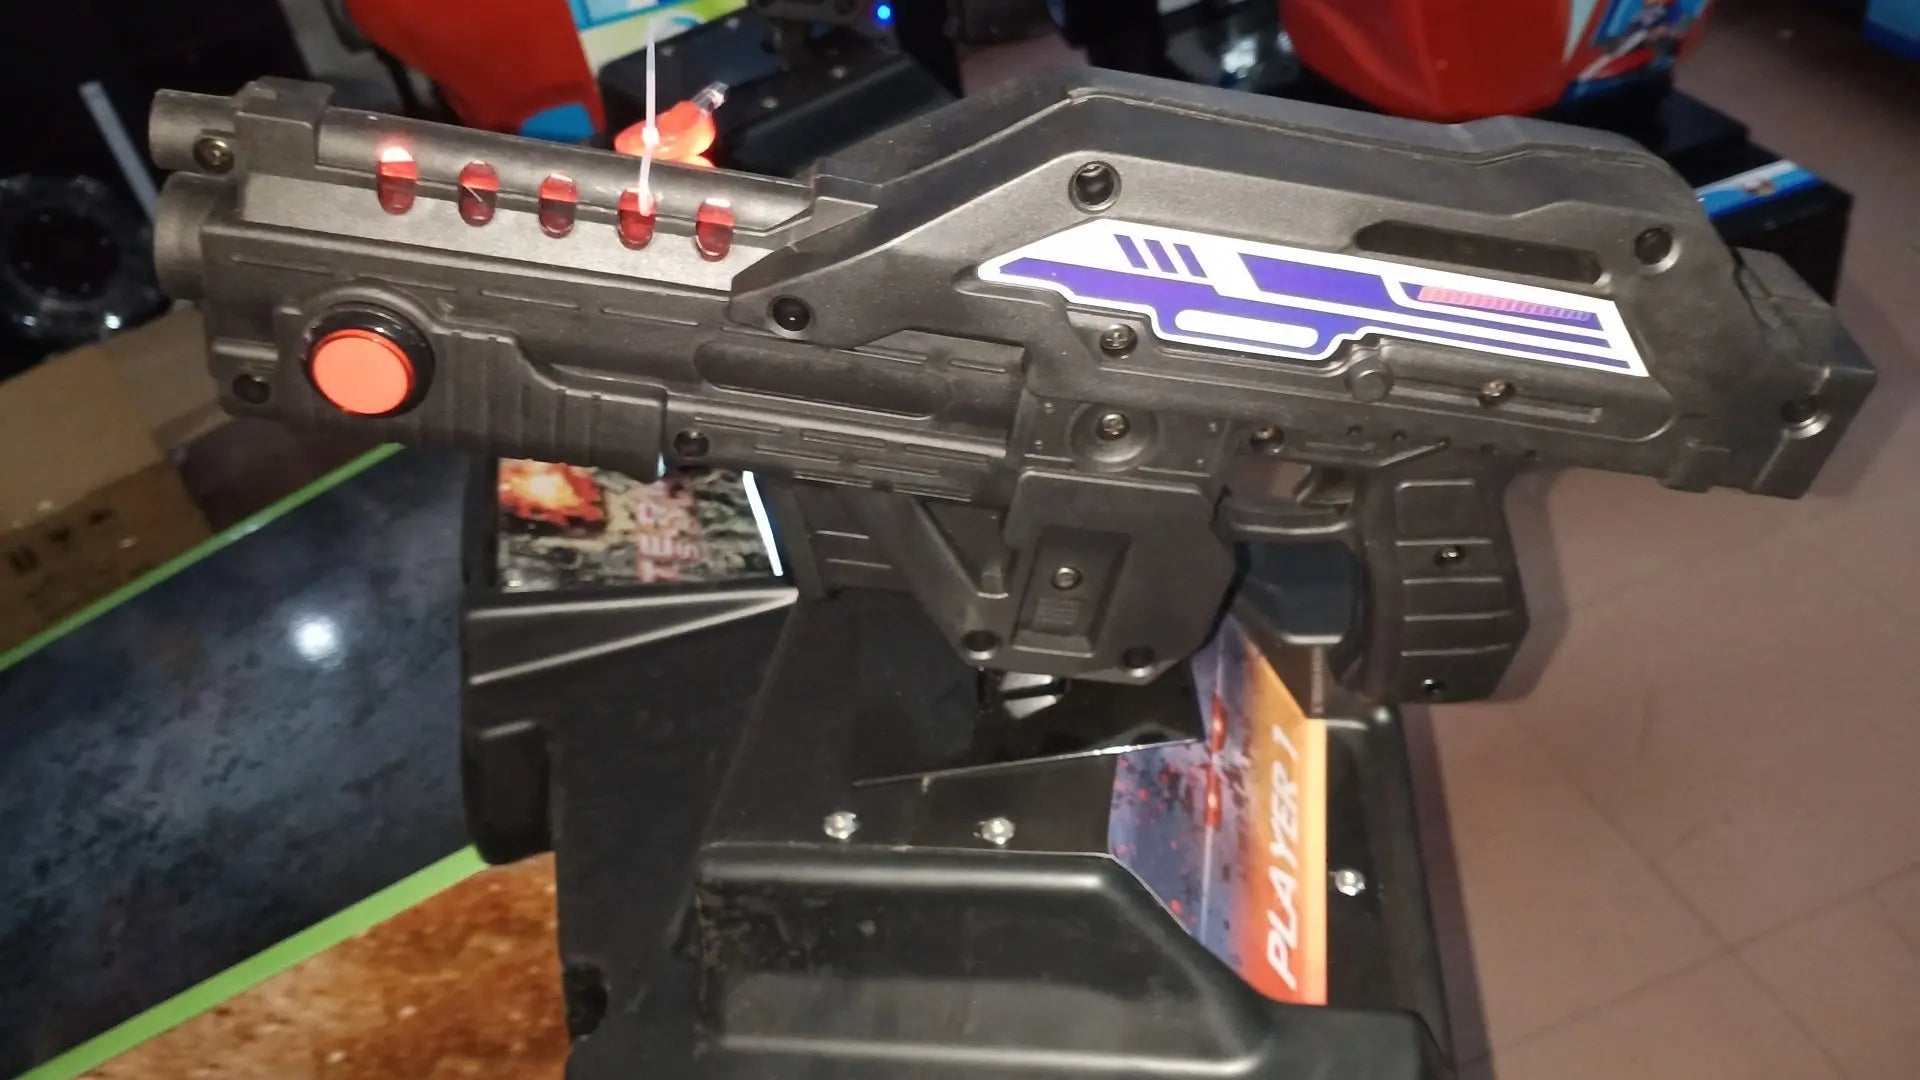 Erminator Salvation Shooting Gun Game Machine Arcade Video Gun games